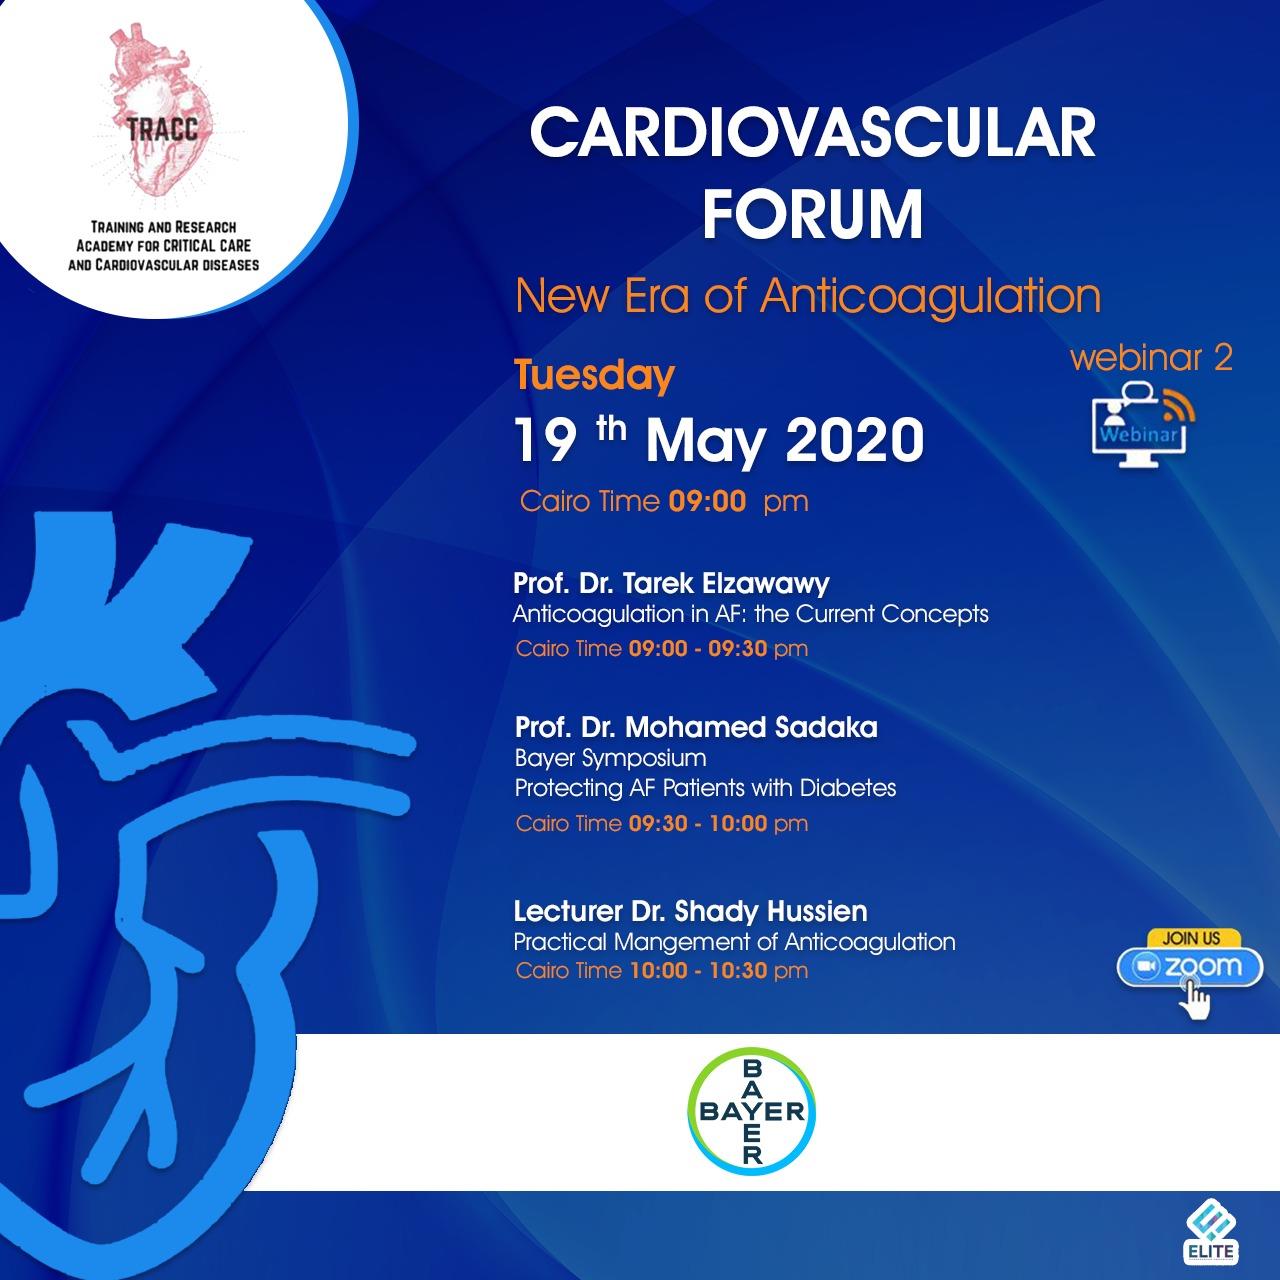 2nd Webinar Cardiovascular Forum (TRACC) Training & Research Academy for Critical Care & Cardiovascular diseases